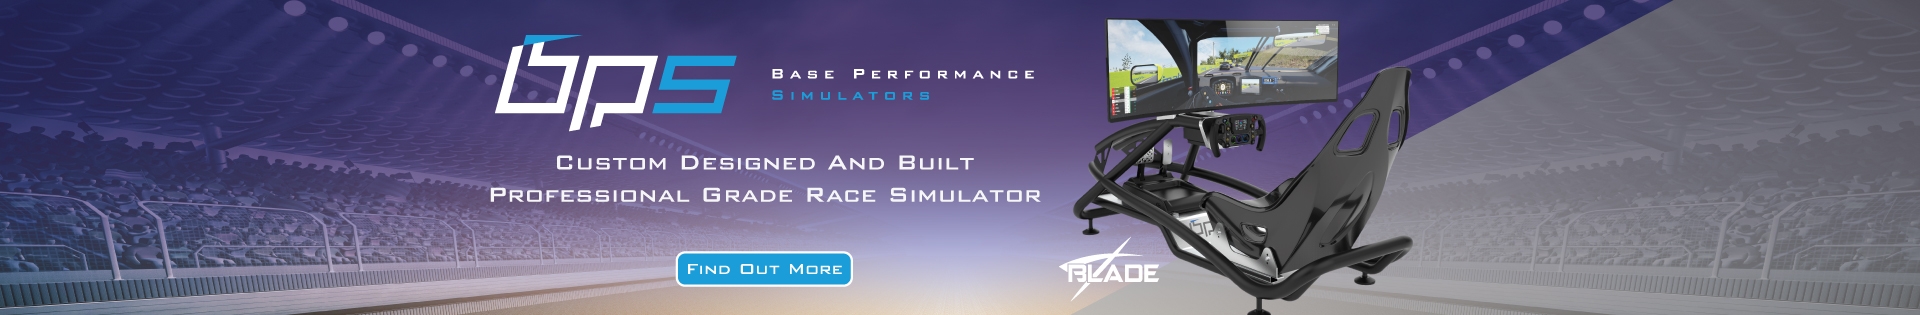 Base Performance Simulators